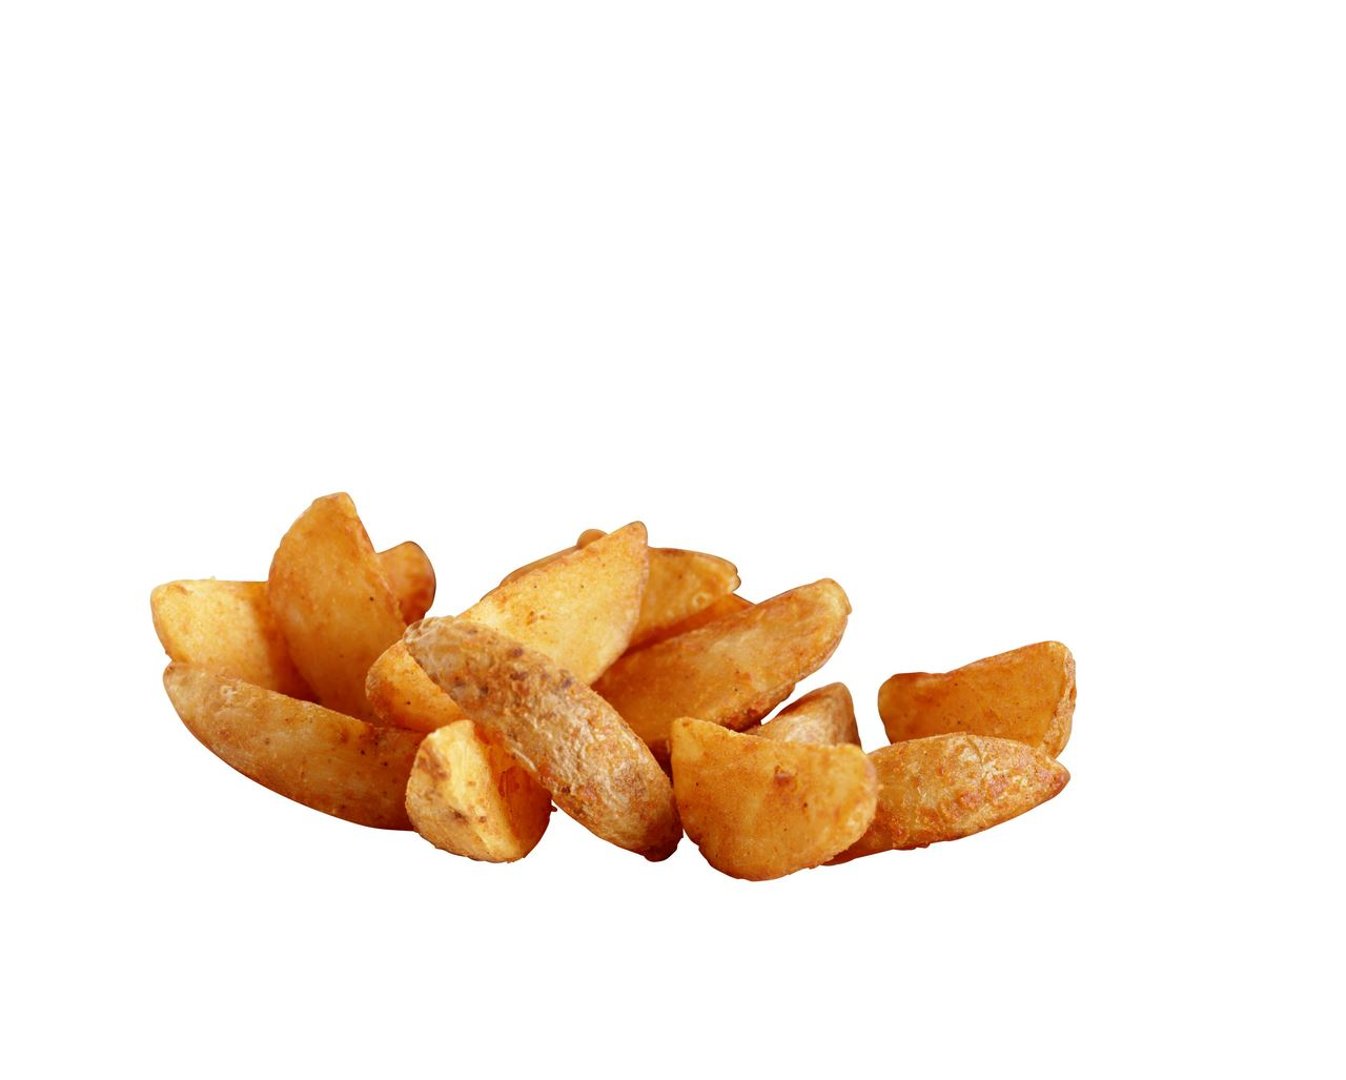 Aviko - Spicy Jacket Wedges Kartoffelecken tiefgefroren - 2,5 kg Beutel